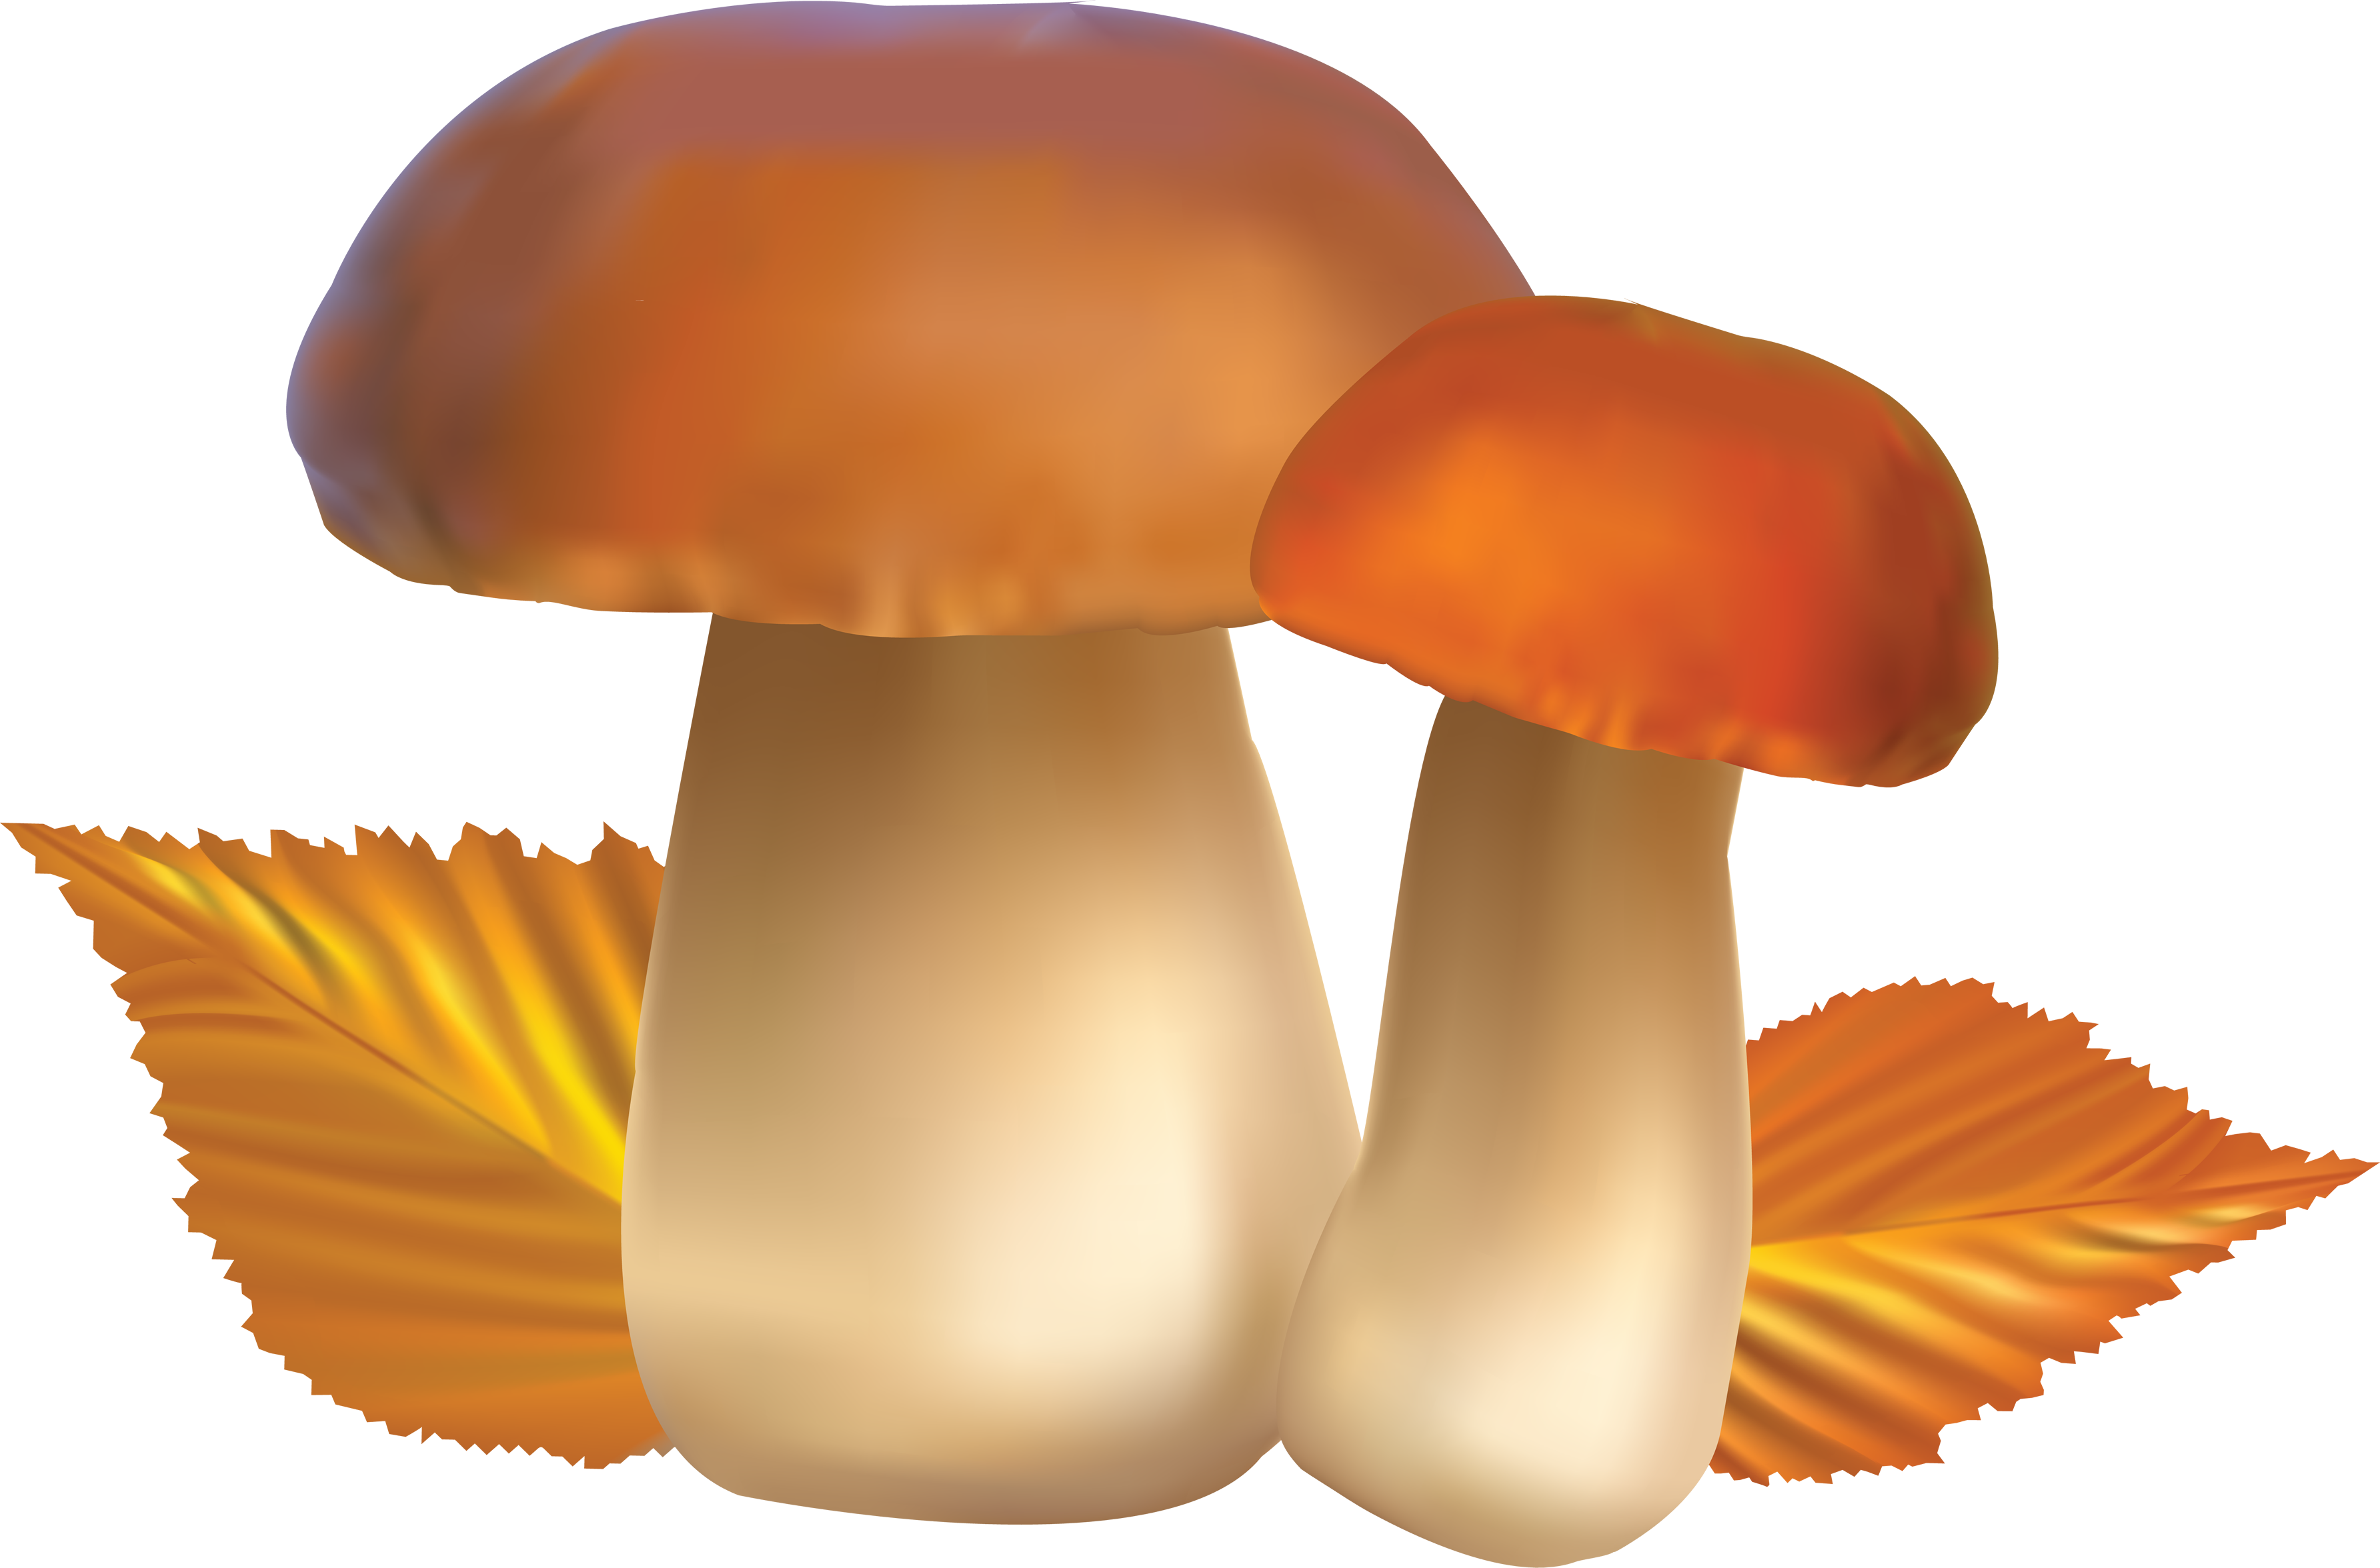 Mushroom clipart bing images mushrooms image